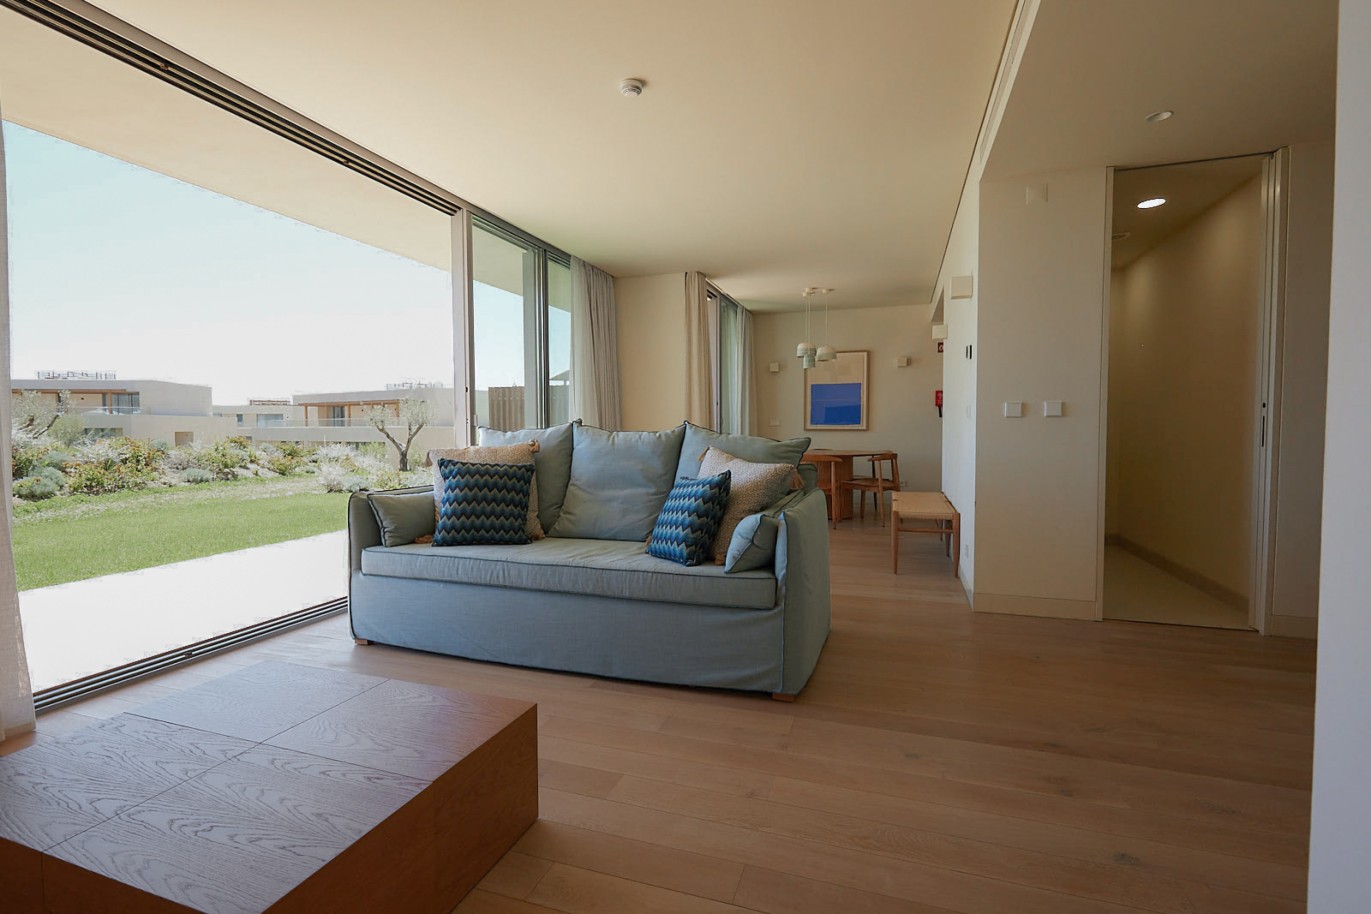 2 bedroom apartment in resort, for sale in Porches, Algarve_230563